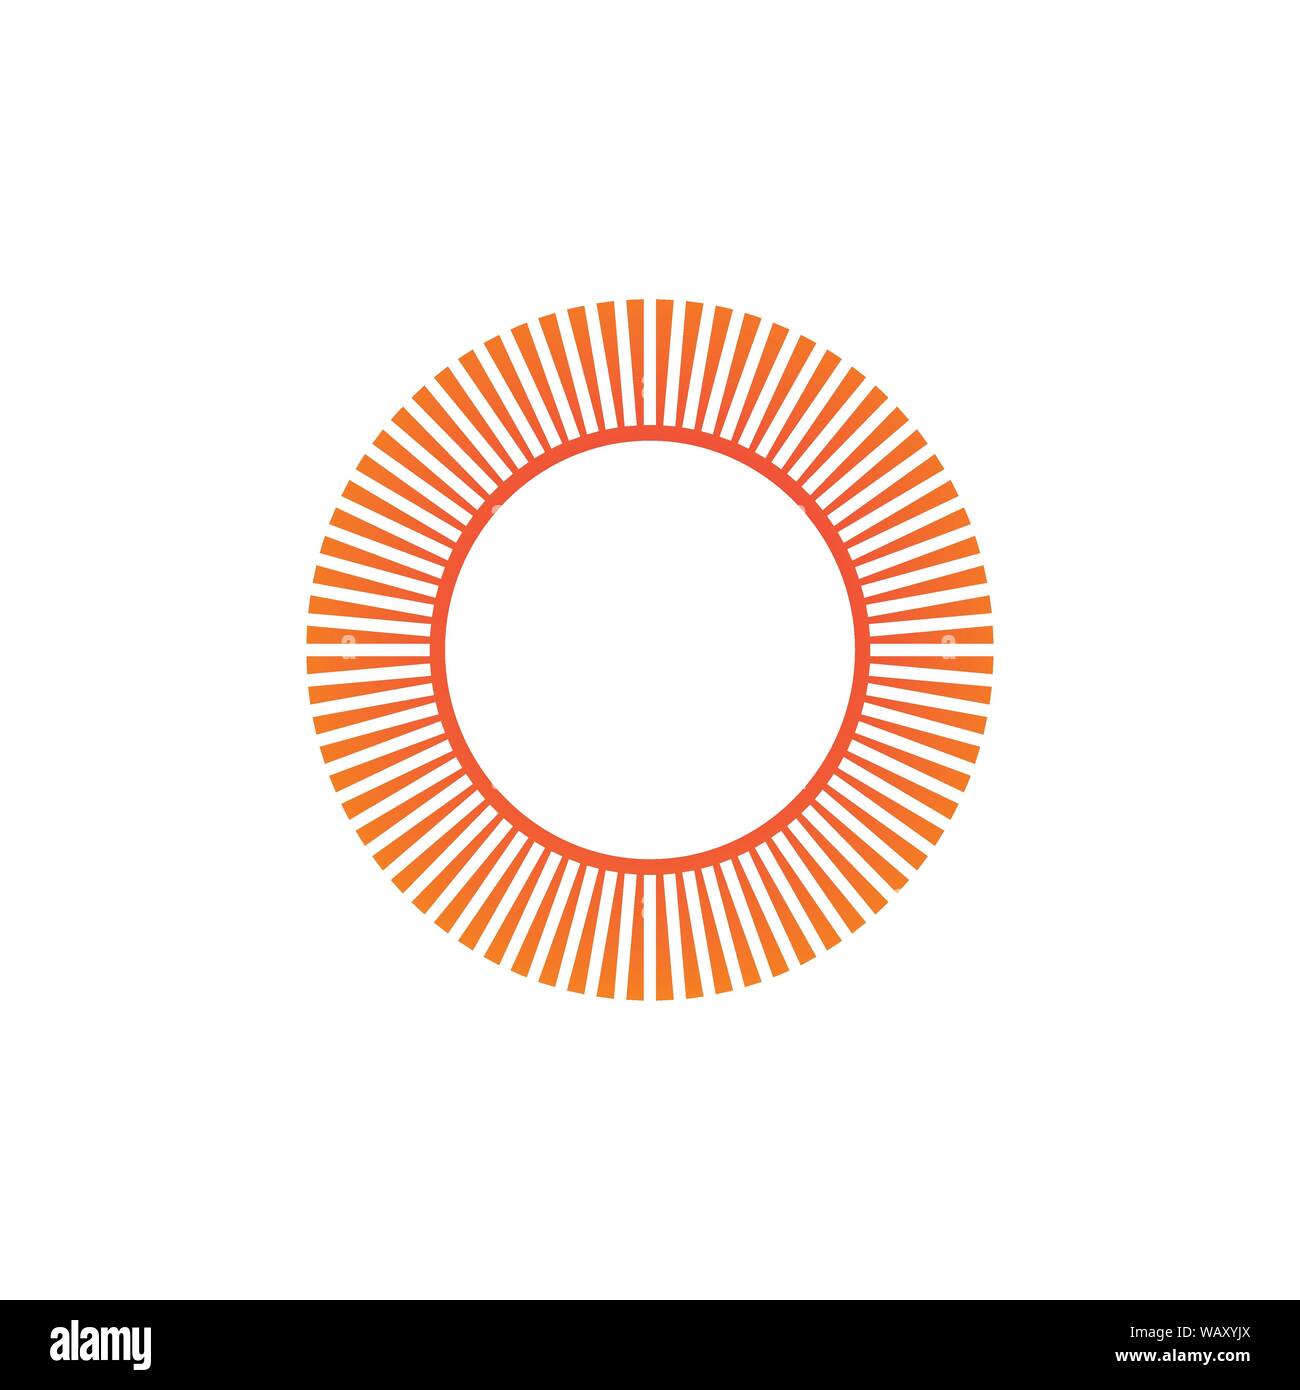 Geometrische Kreis sun Element. Abstrakte Kreis Form. Vector Illustration isoliert auf Weiss. Stock Vektor